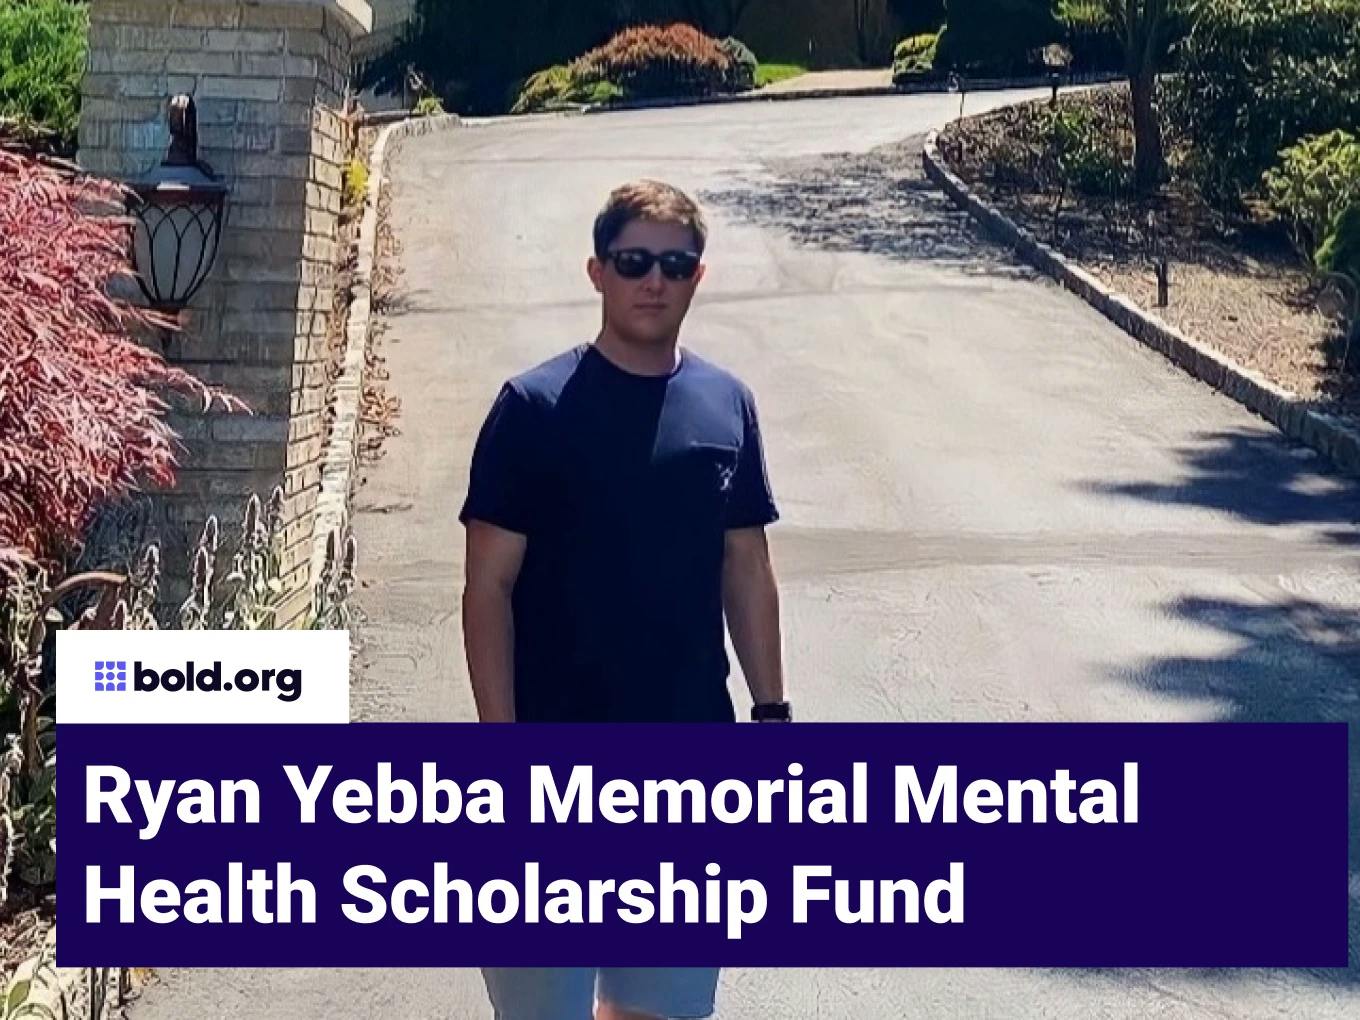 Ryan Yebba Memorial Mental Health Scholarship Fund